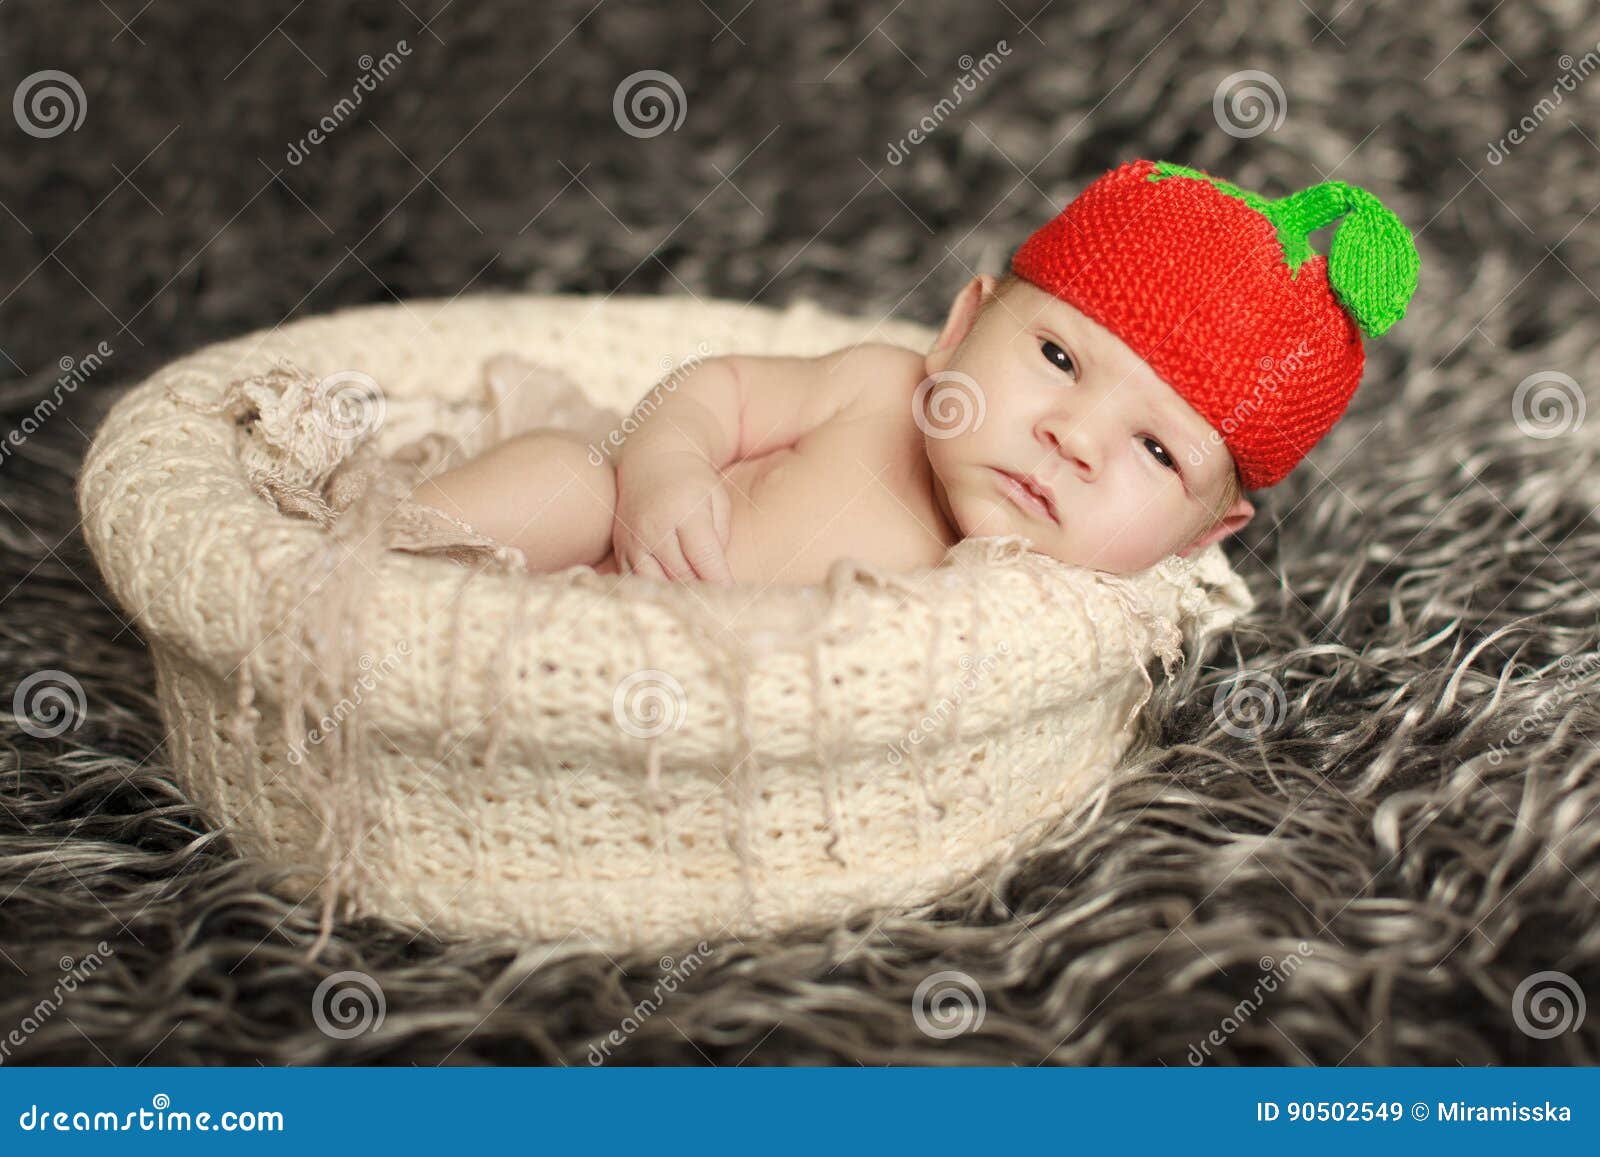 Newborn Baby Sleeping On Fur In The Basket In Funny Hat ...